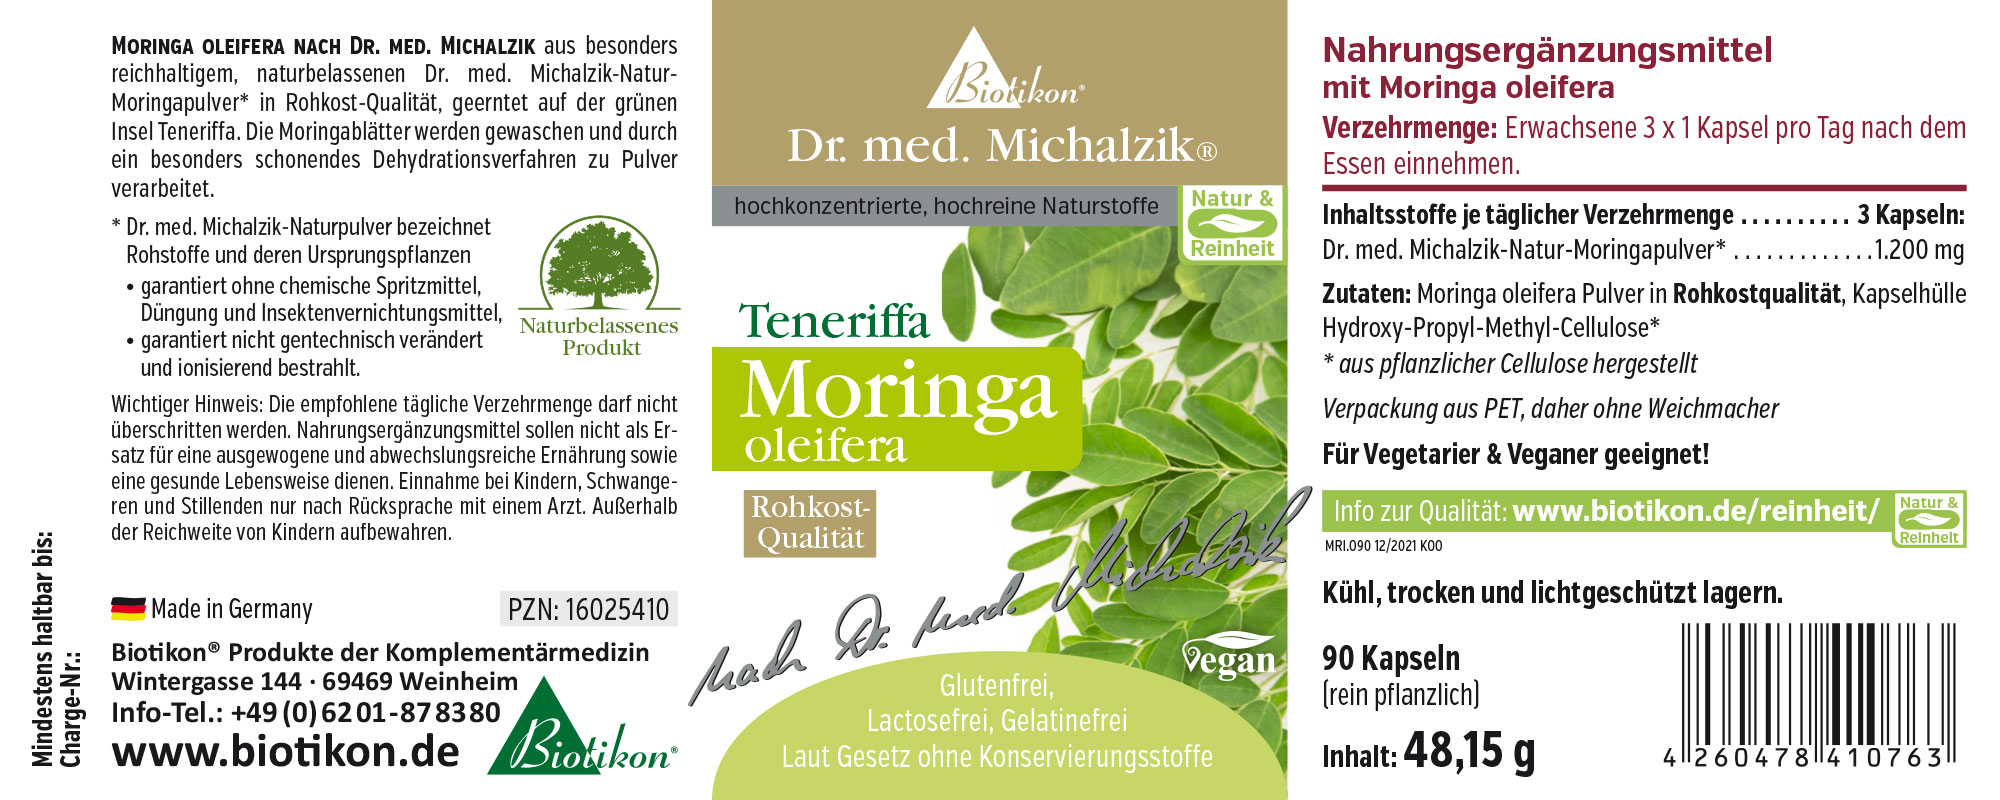 Moringa aus Teneriffa